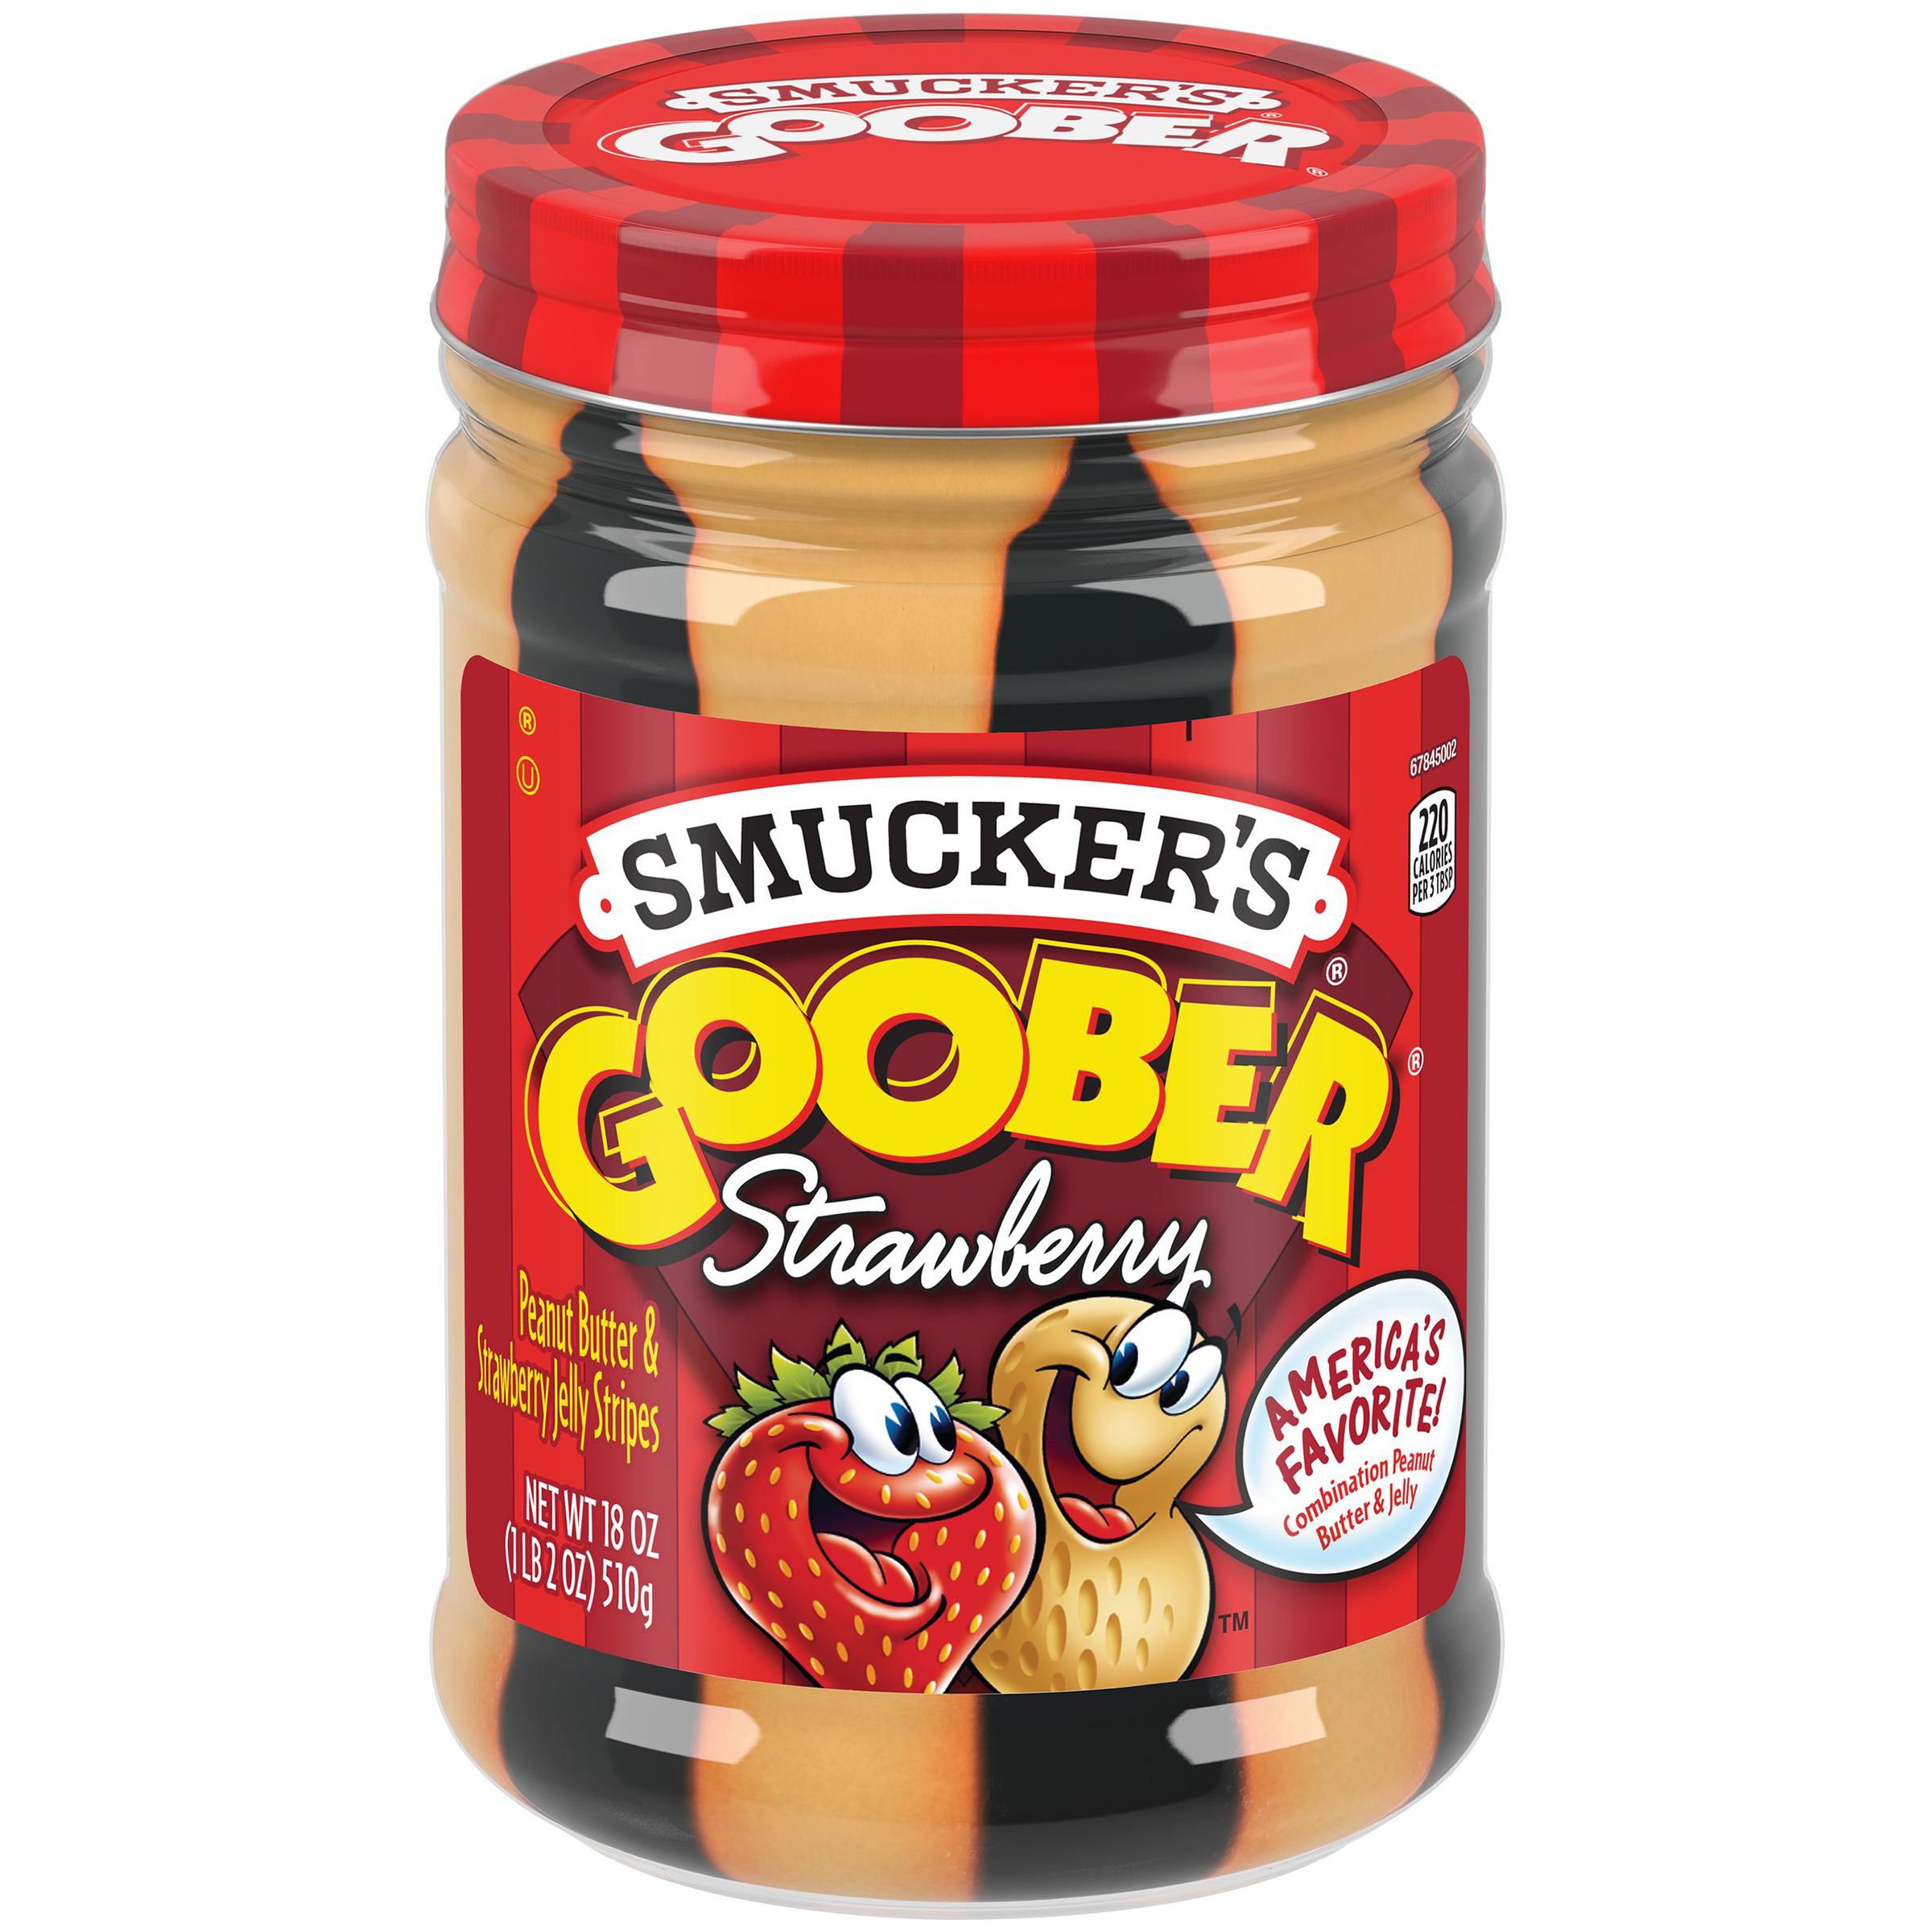 Smucker's Goober - Peanut Butter & Strawberry Jelly